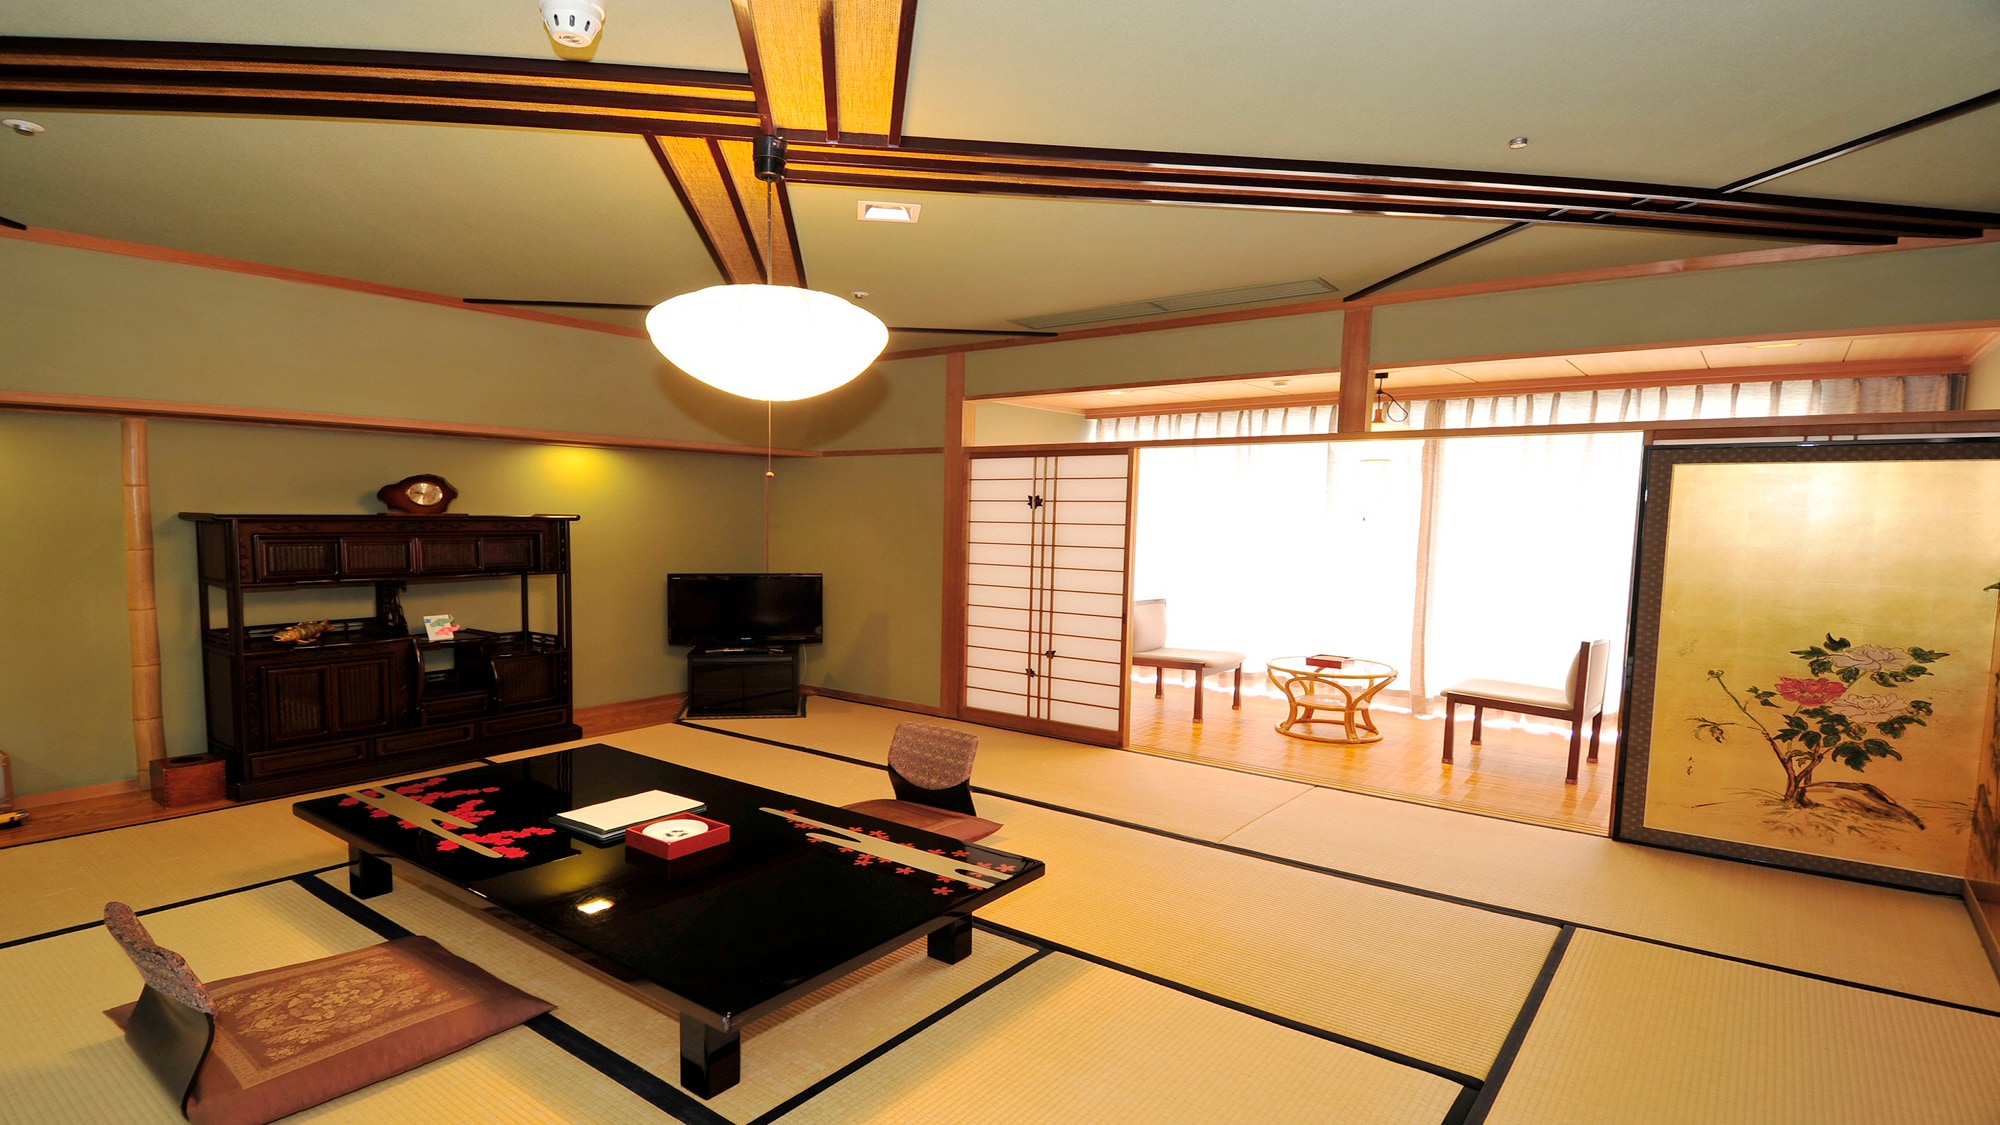 ◆ Japanese-style room 12.5 tatami mats + wide rim